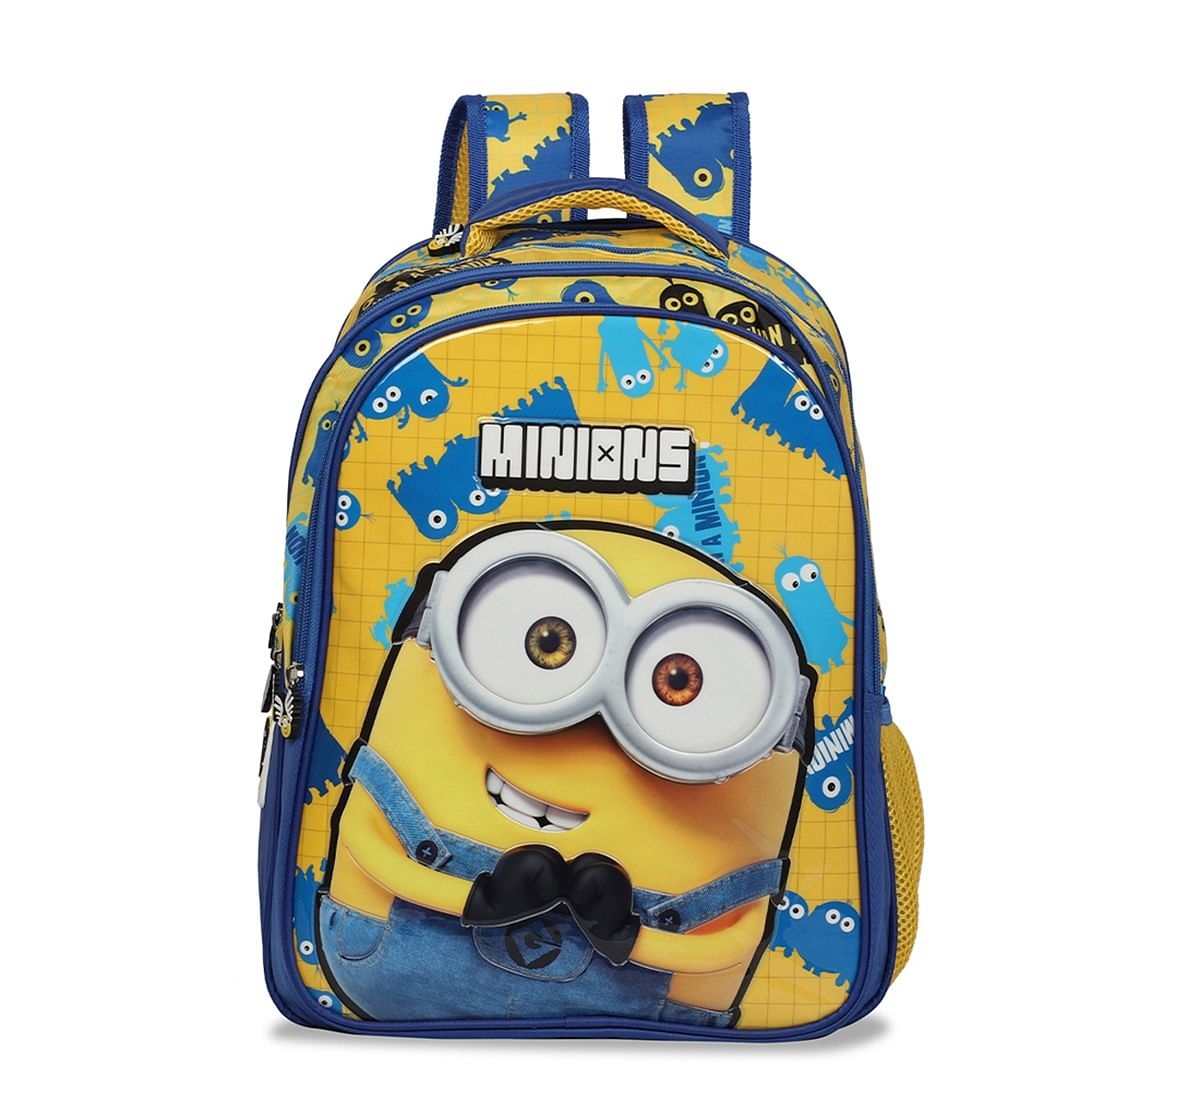 Minions Minions Hood School Bag 41 Cm Bags for Kids age 7Y+ (Yellow)